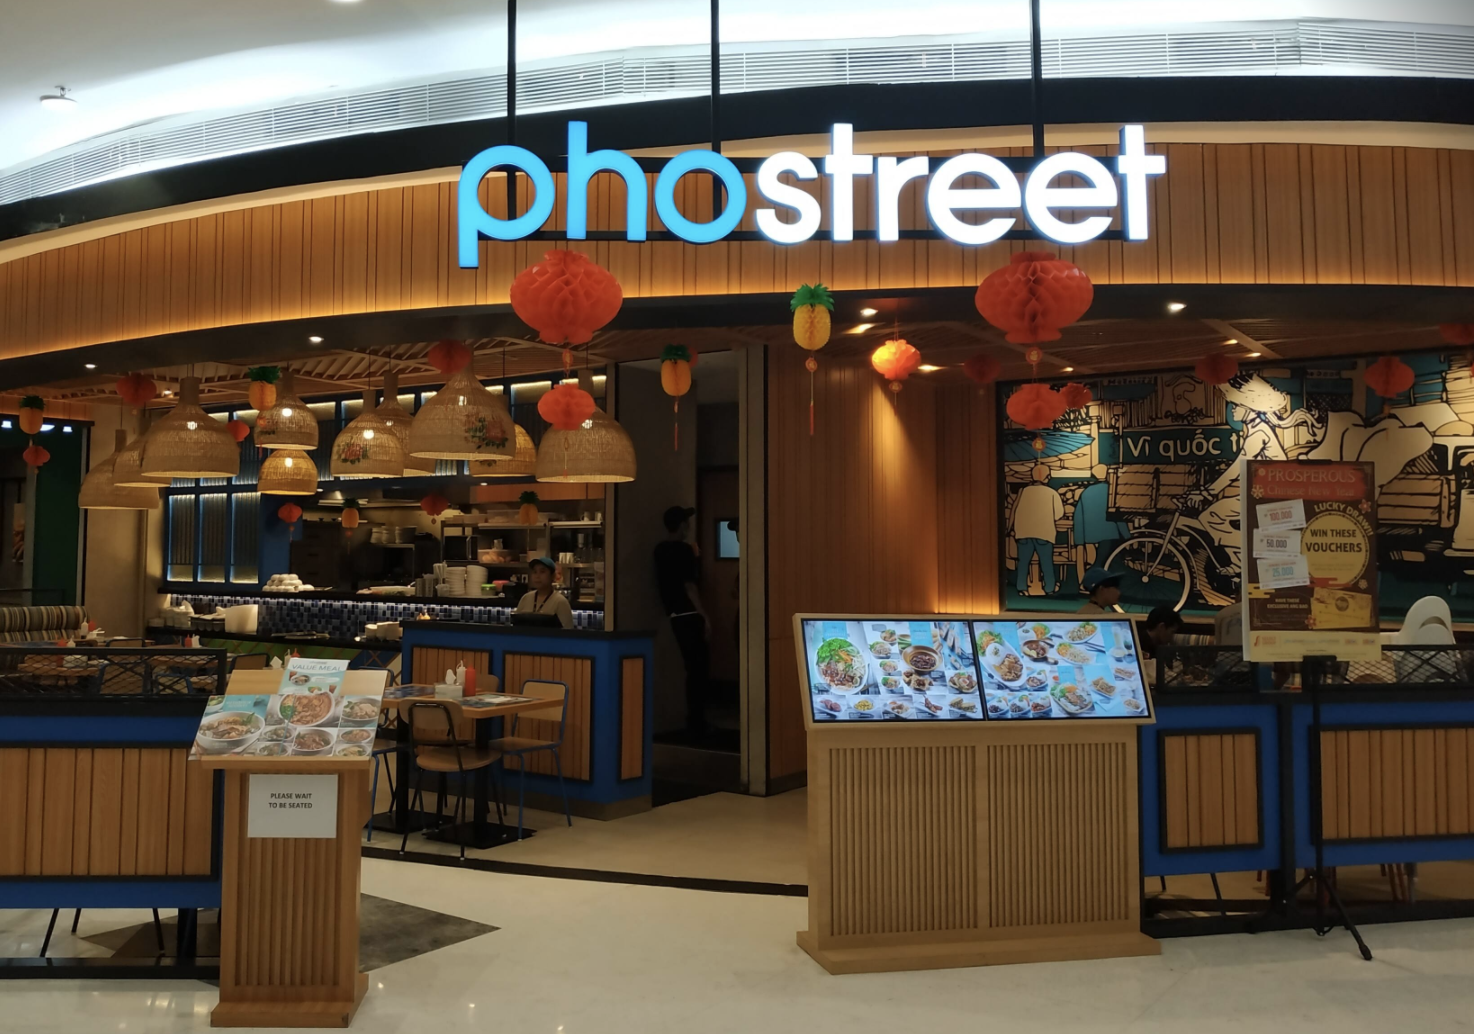 Pho Street shop front in lippo mall puri st. moritz